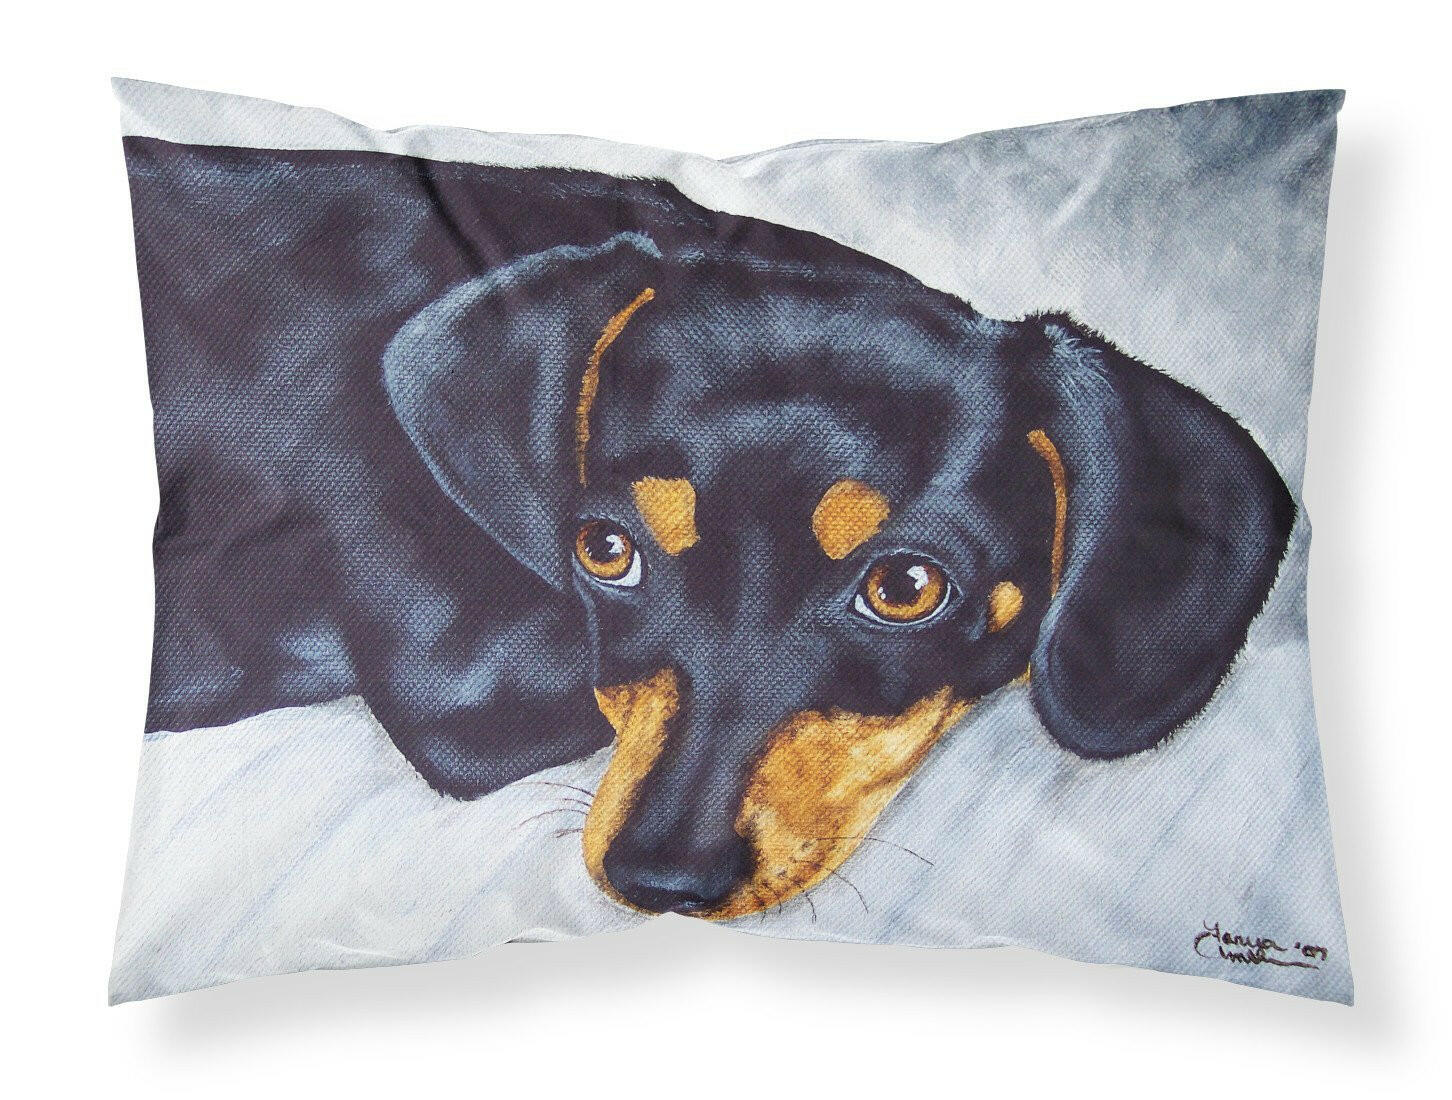 Black and Tan Doxie Dachshund Fabric Standard Pillowcase AMB1079PILLOWCASE by Caroline's Treasures